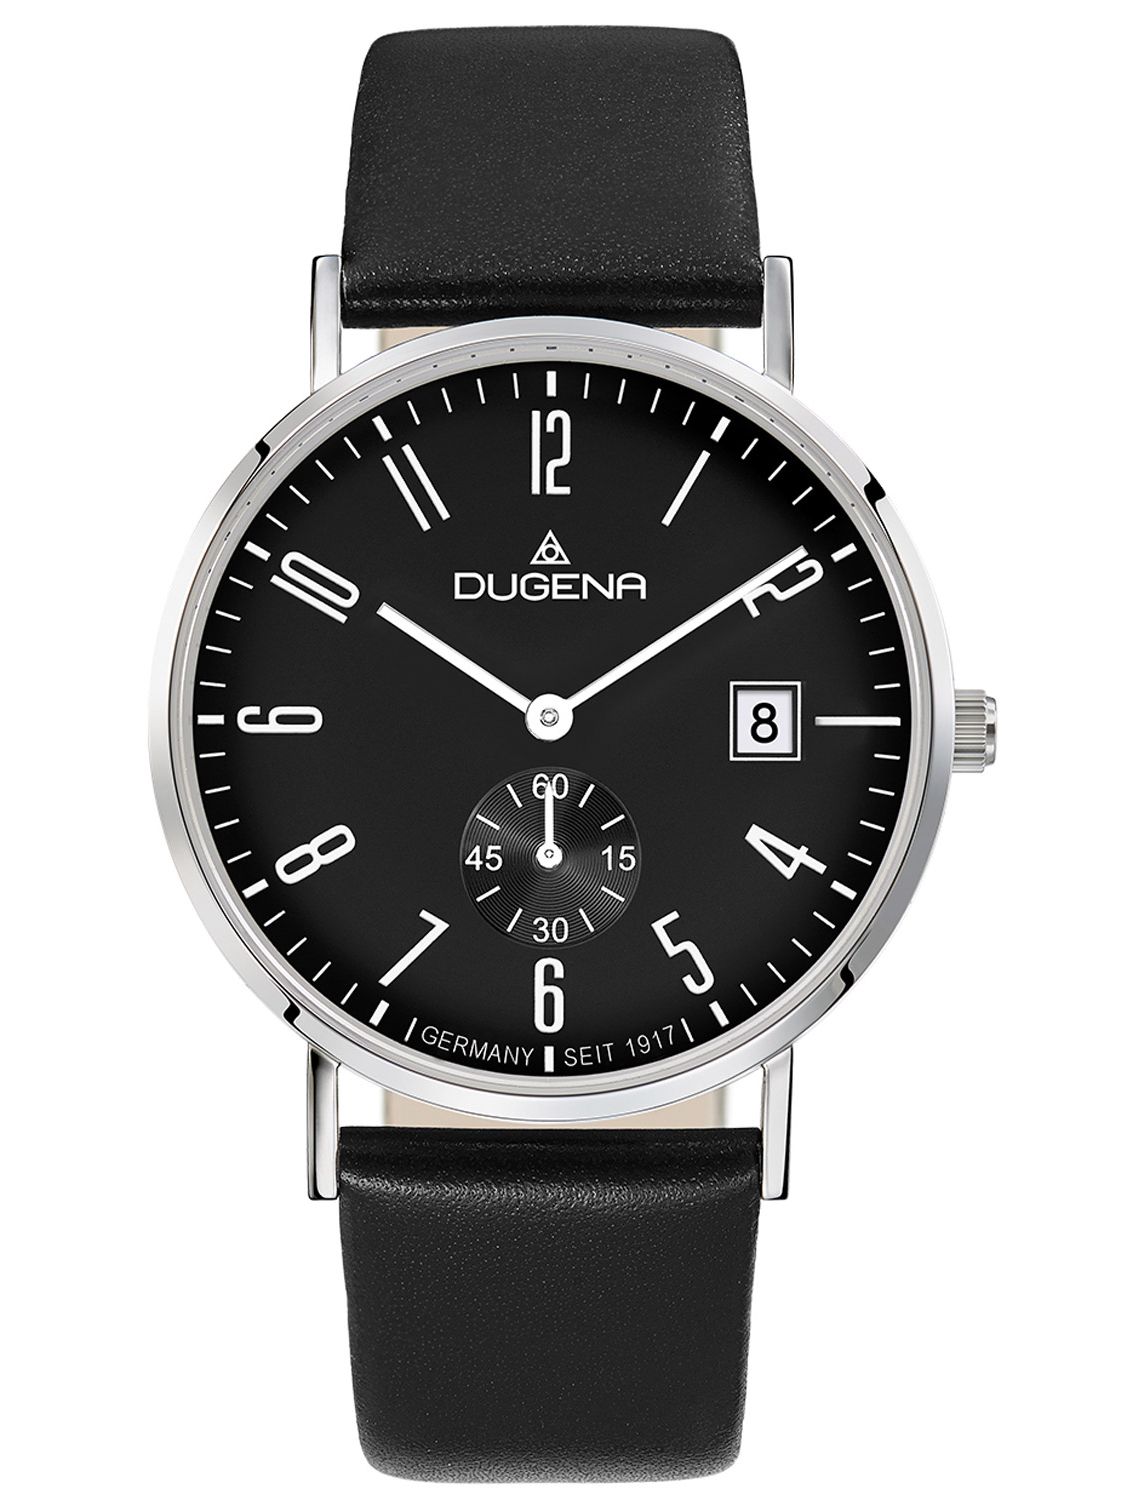 Mondo uhrcenter Strap Quartz 4460666-1 Leather Men\'s Dugena Black • Watch